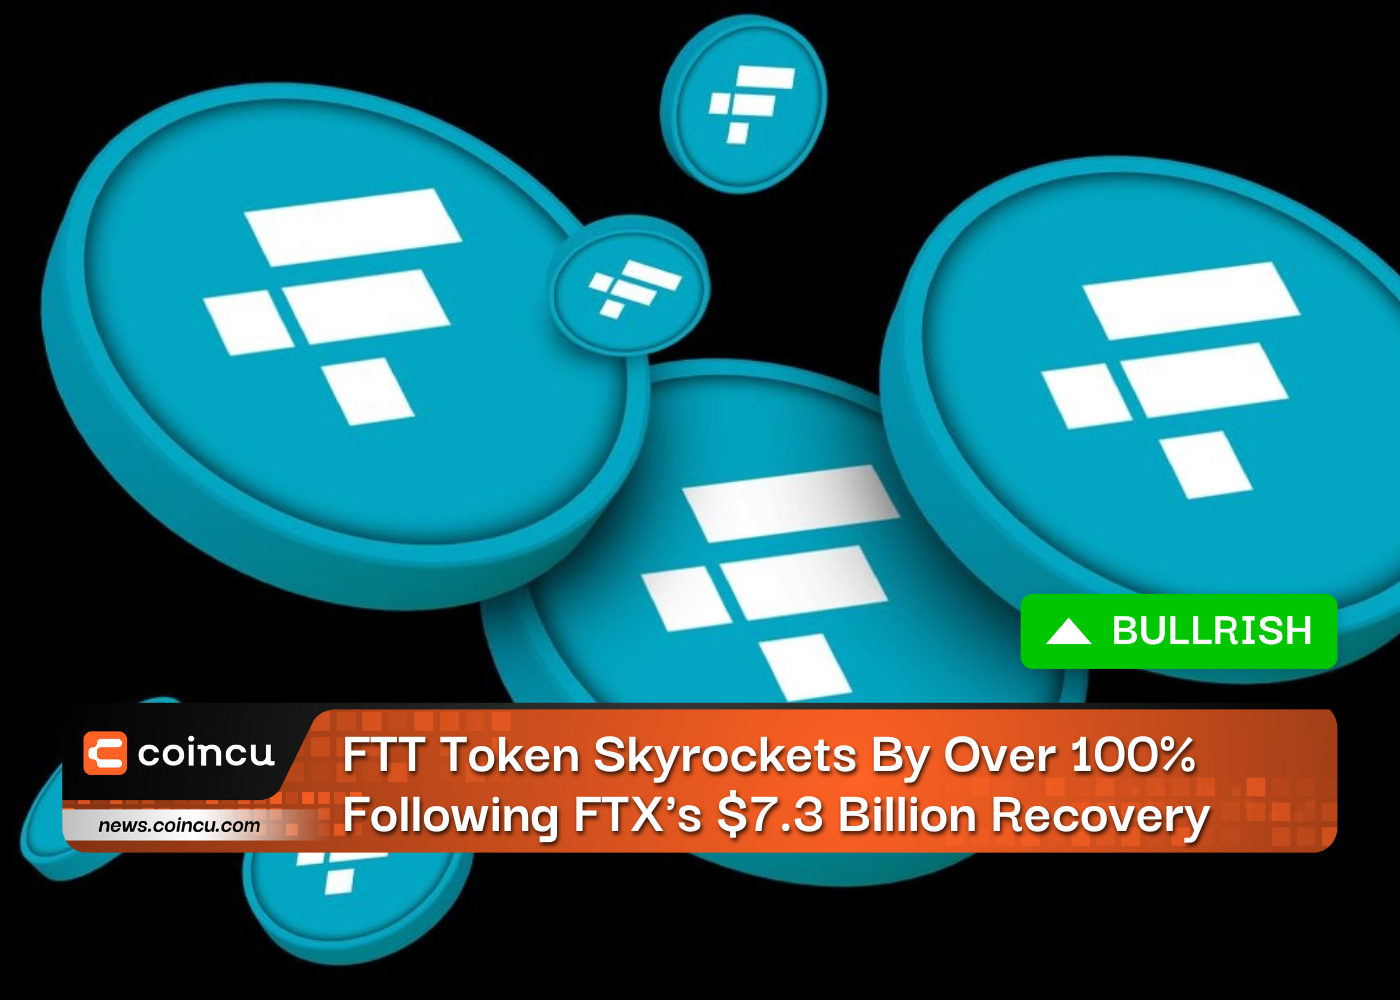 FTT Token Skyrockets By Over 100% Following FTX's $7.3 Billion Recovery